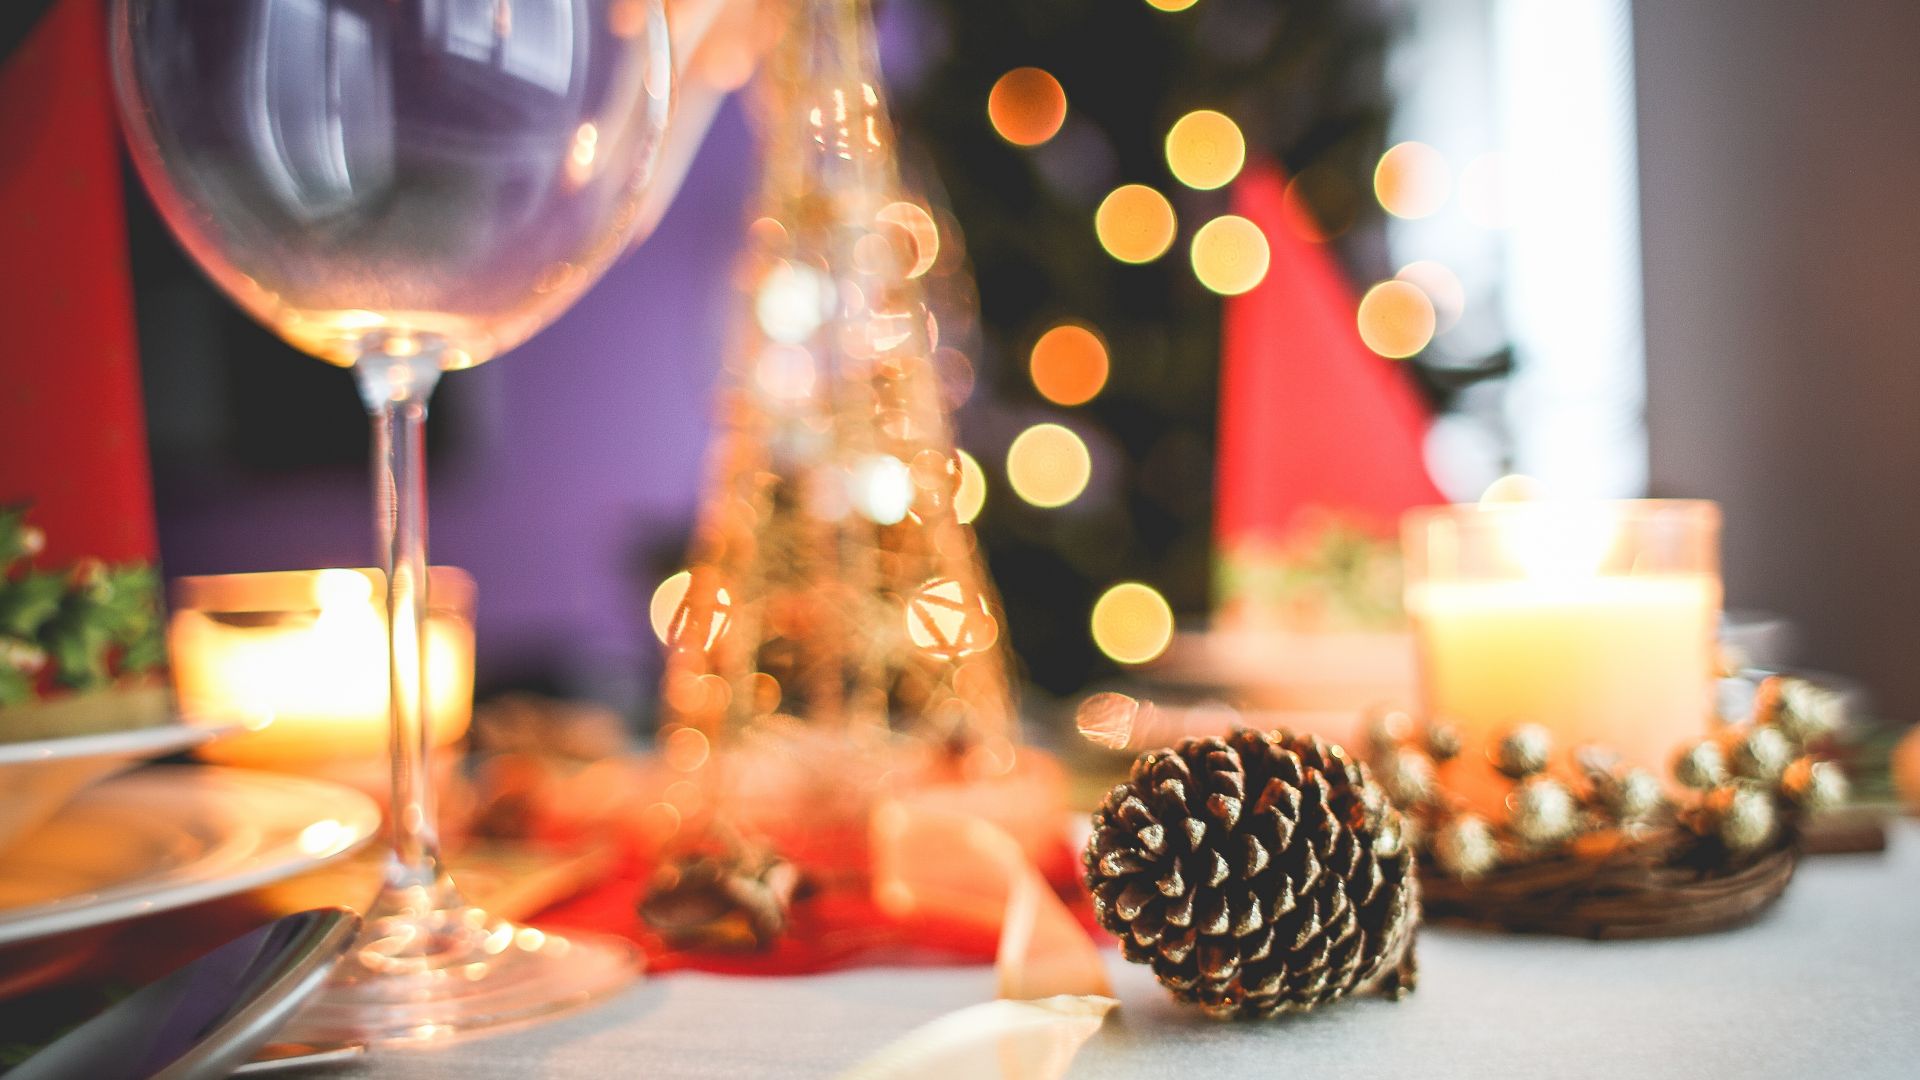 Wallpaper Christmas, new year celebration, wine glass